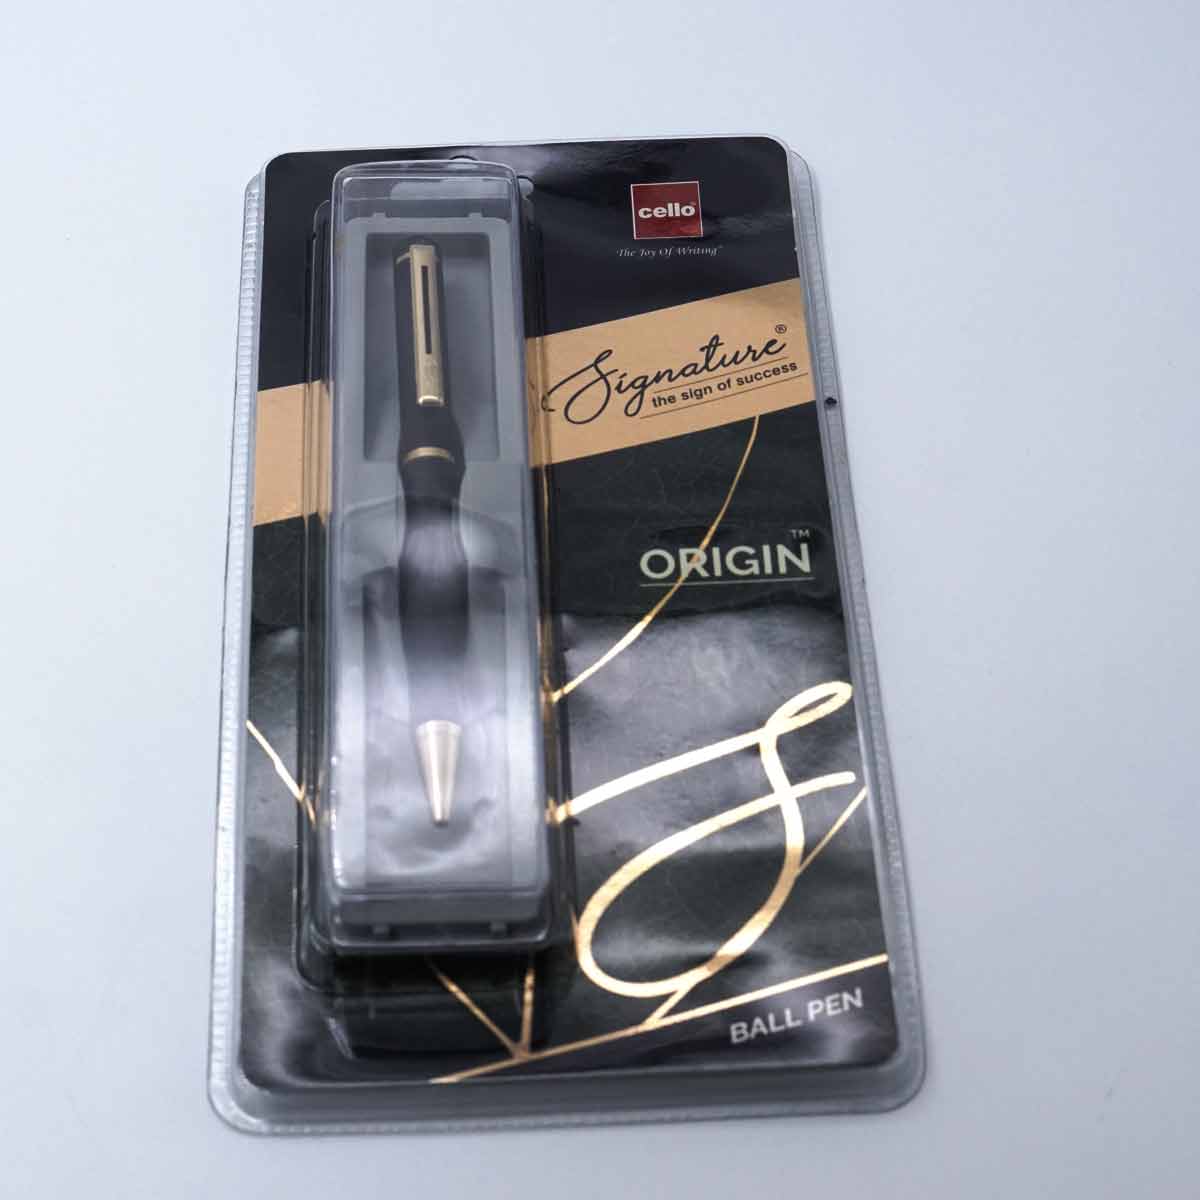 Cello Singature Origin Matt Black Body With Gold Clip And Trim 0.7mm Medium Tip Twist Type Ball Pen  SKU 25307